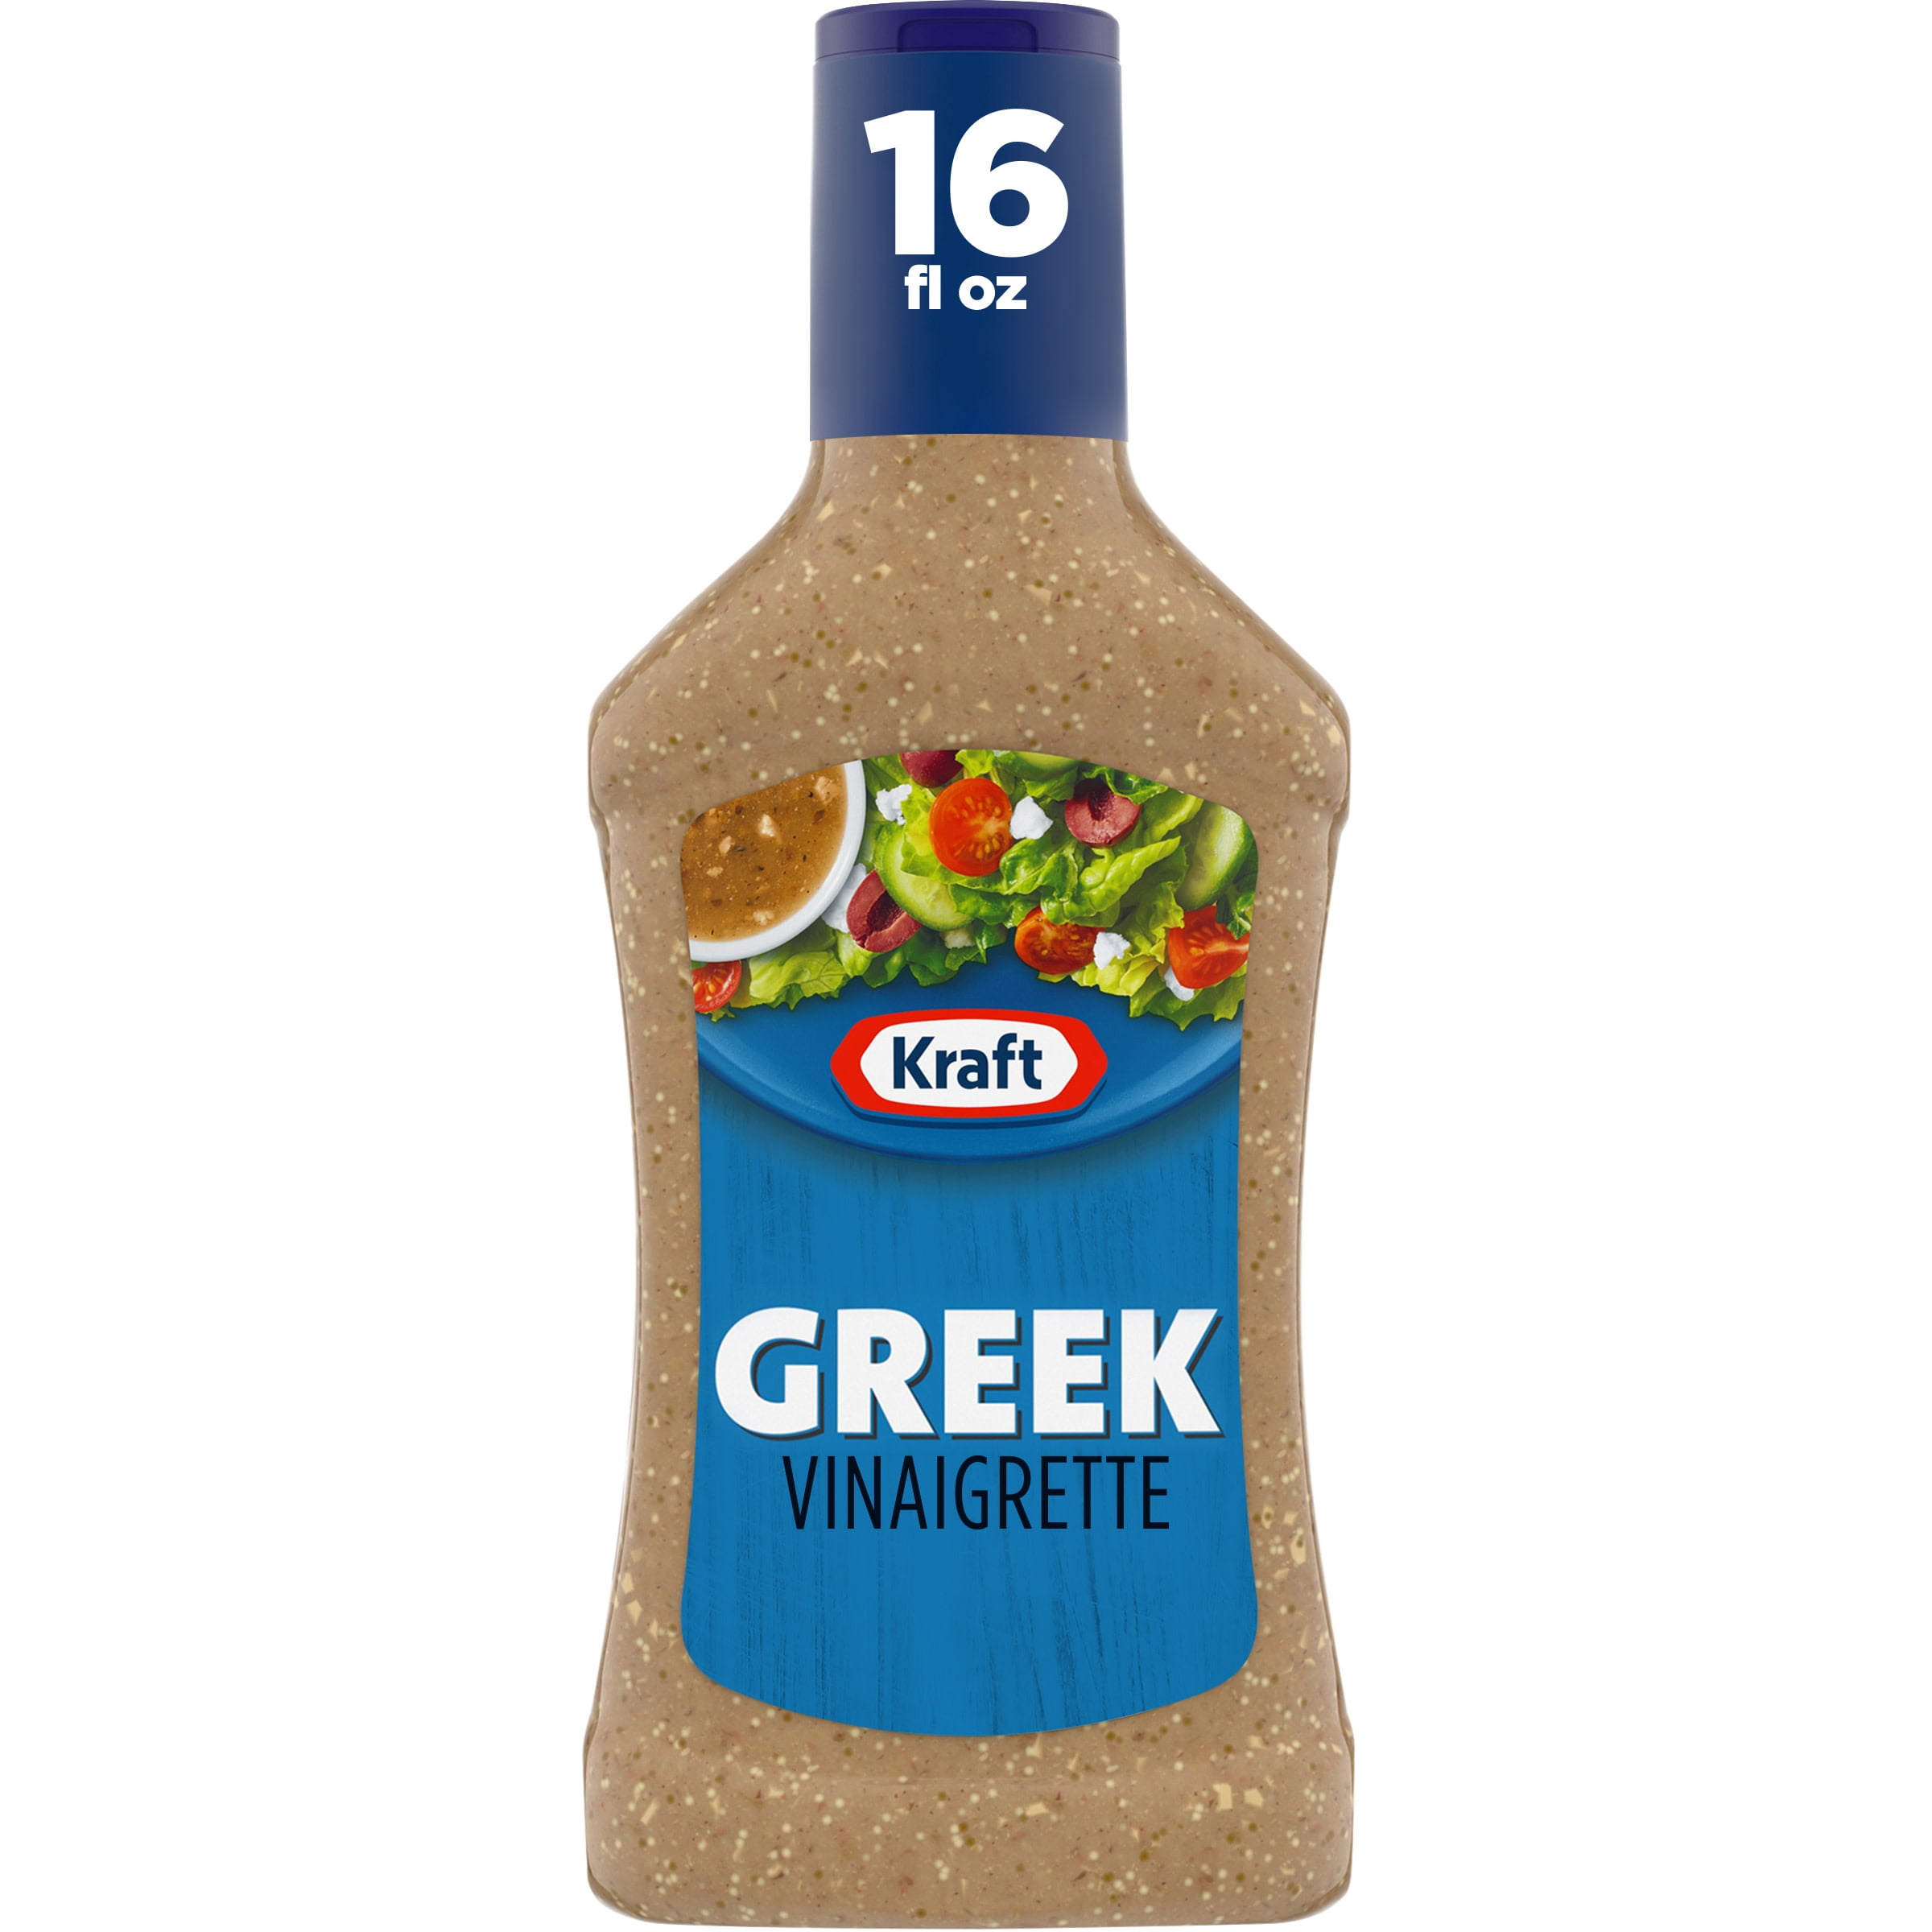 Kraft Greek Vinaigrette Salad Dressing, 16 fl oz Bottle - Walmart.com.